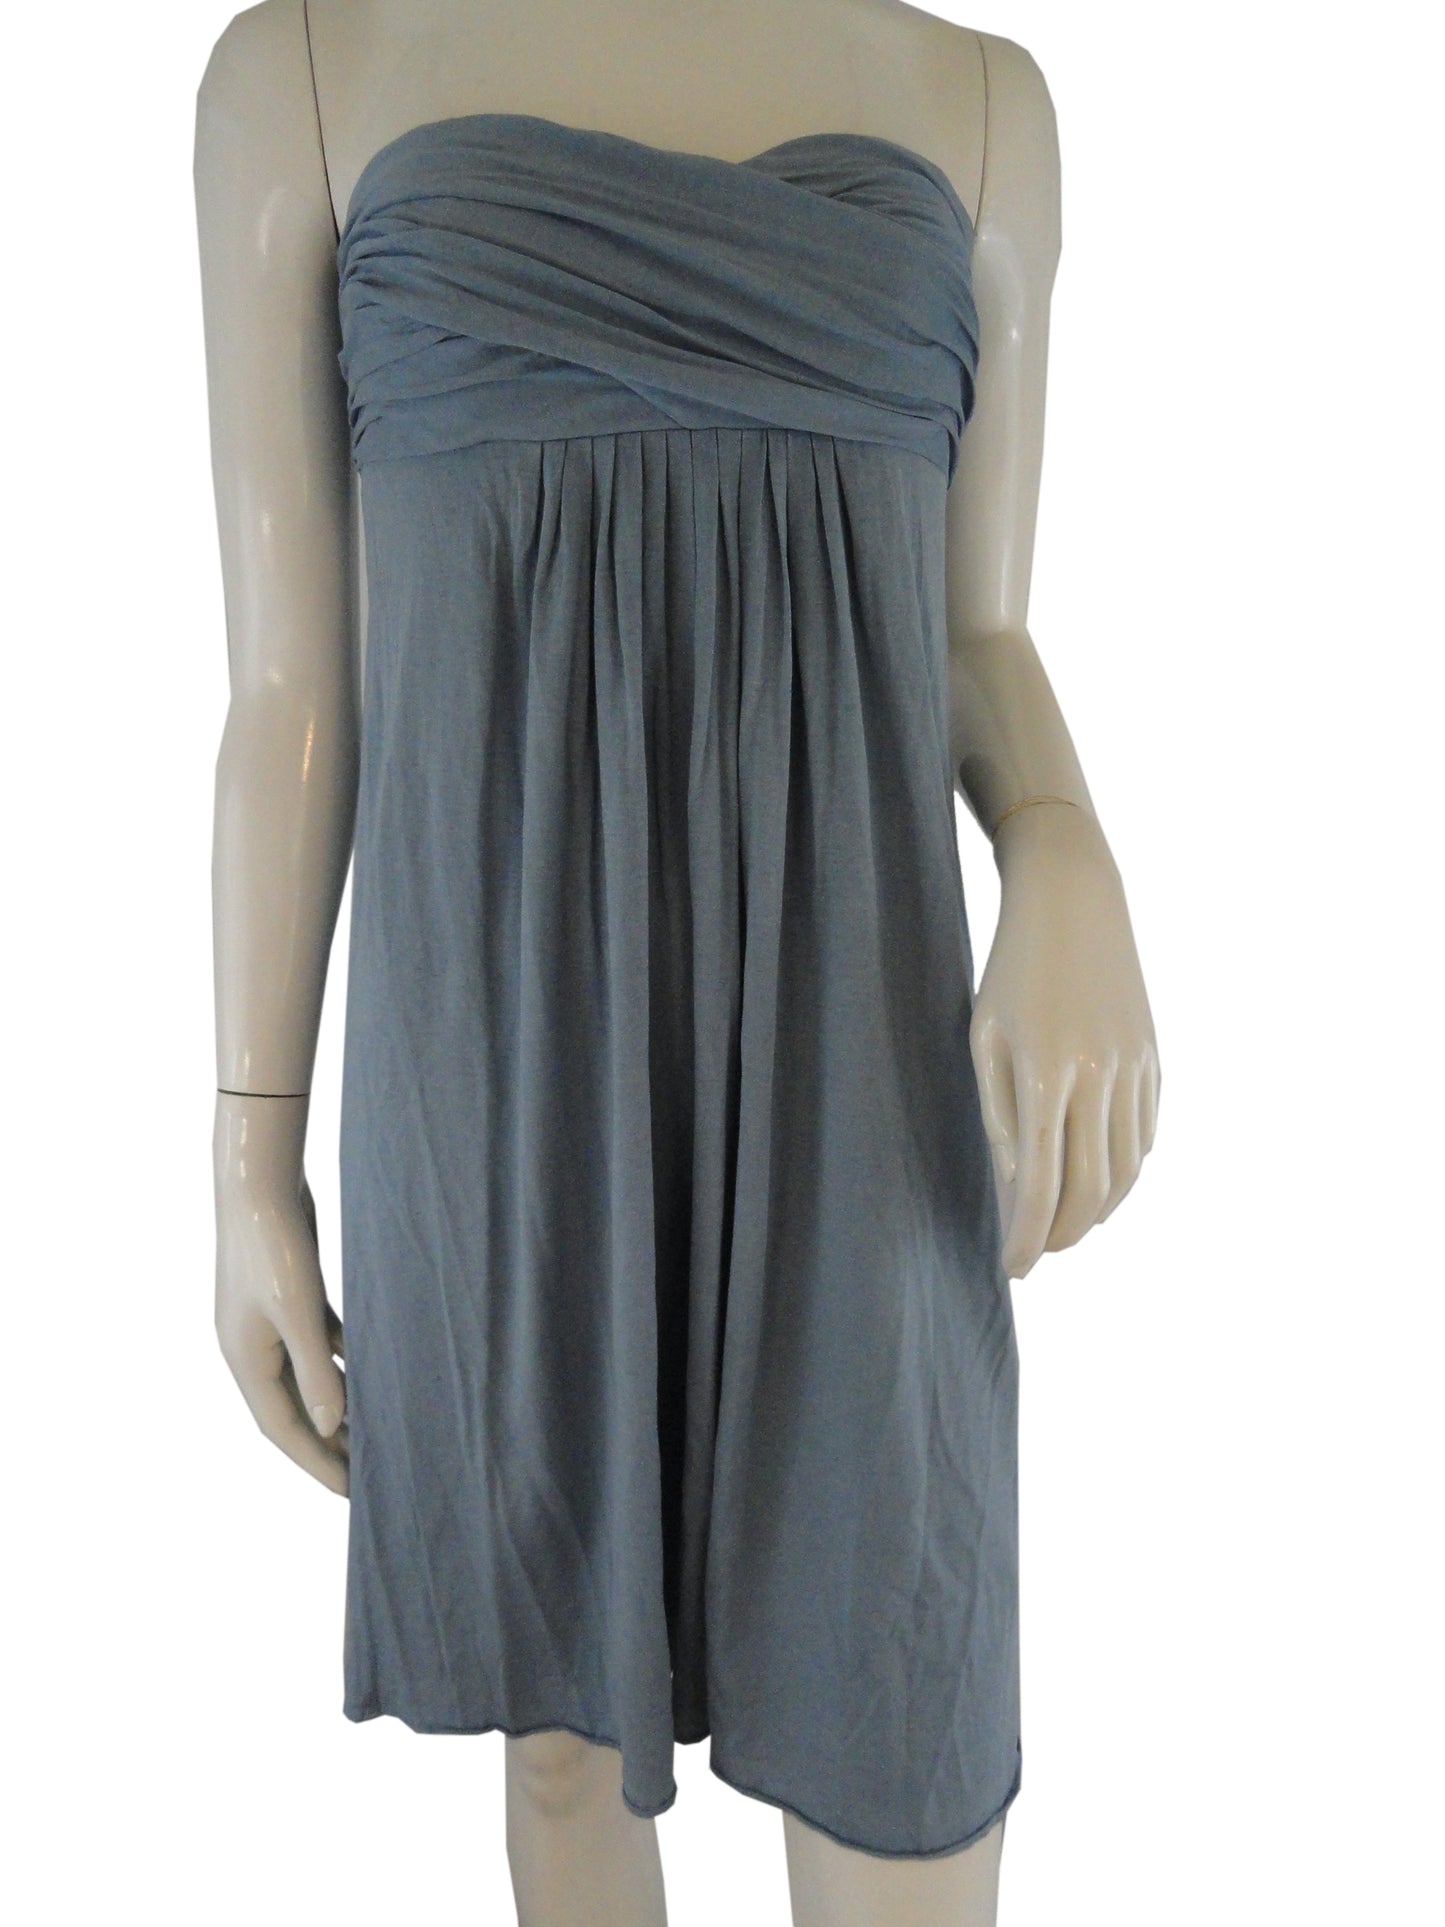 Banana Republic Dress Strapless Grey Blue Size Small SKU 001003